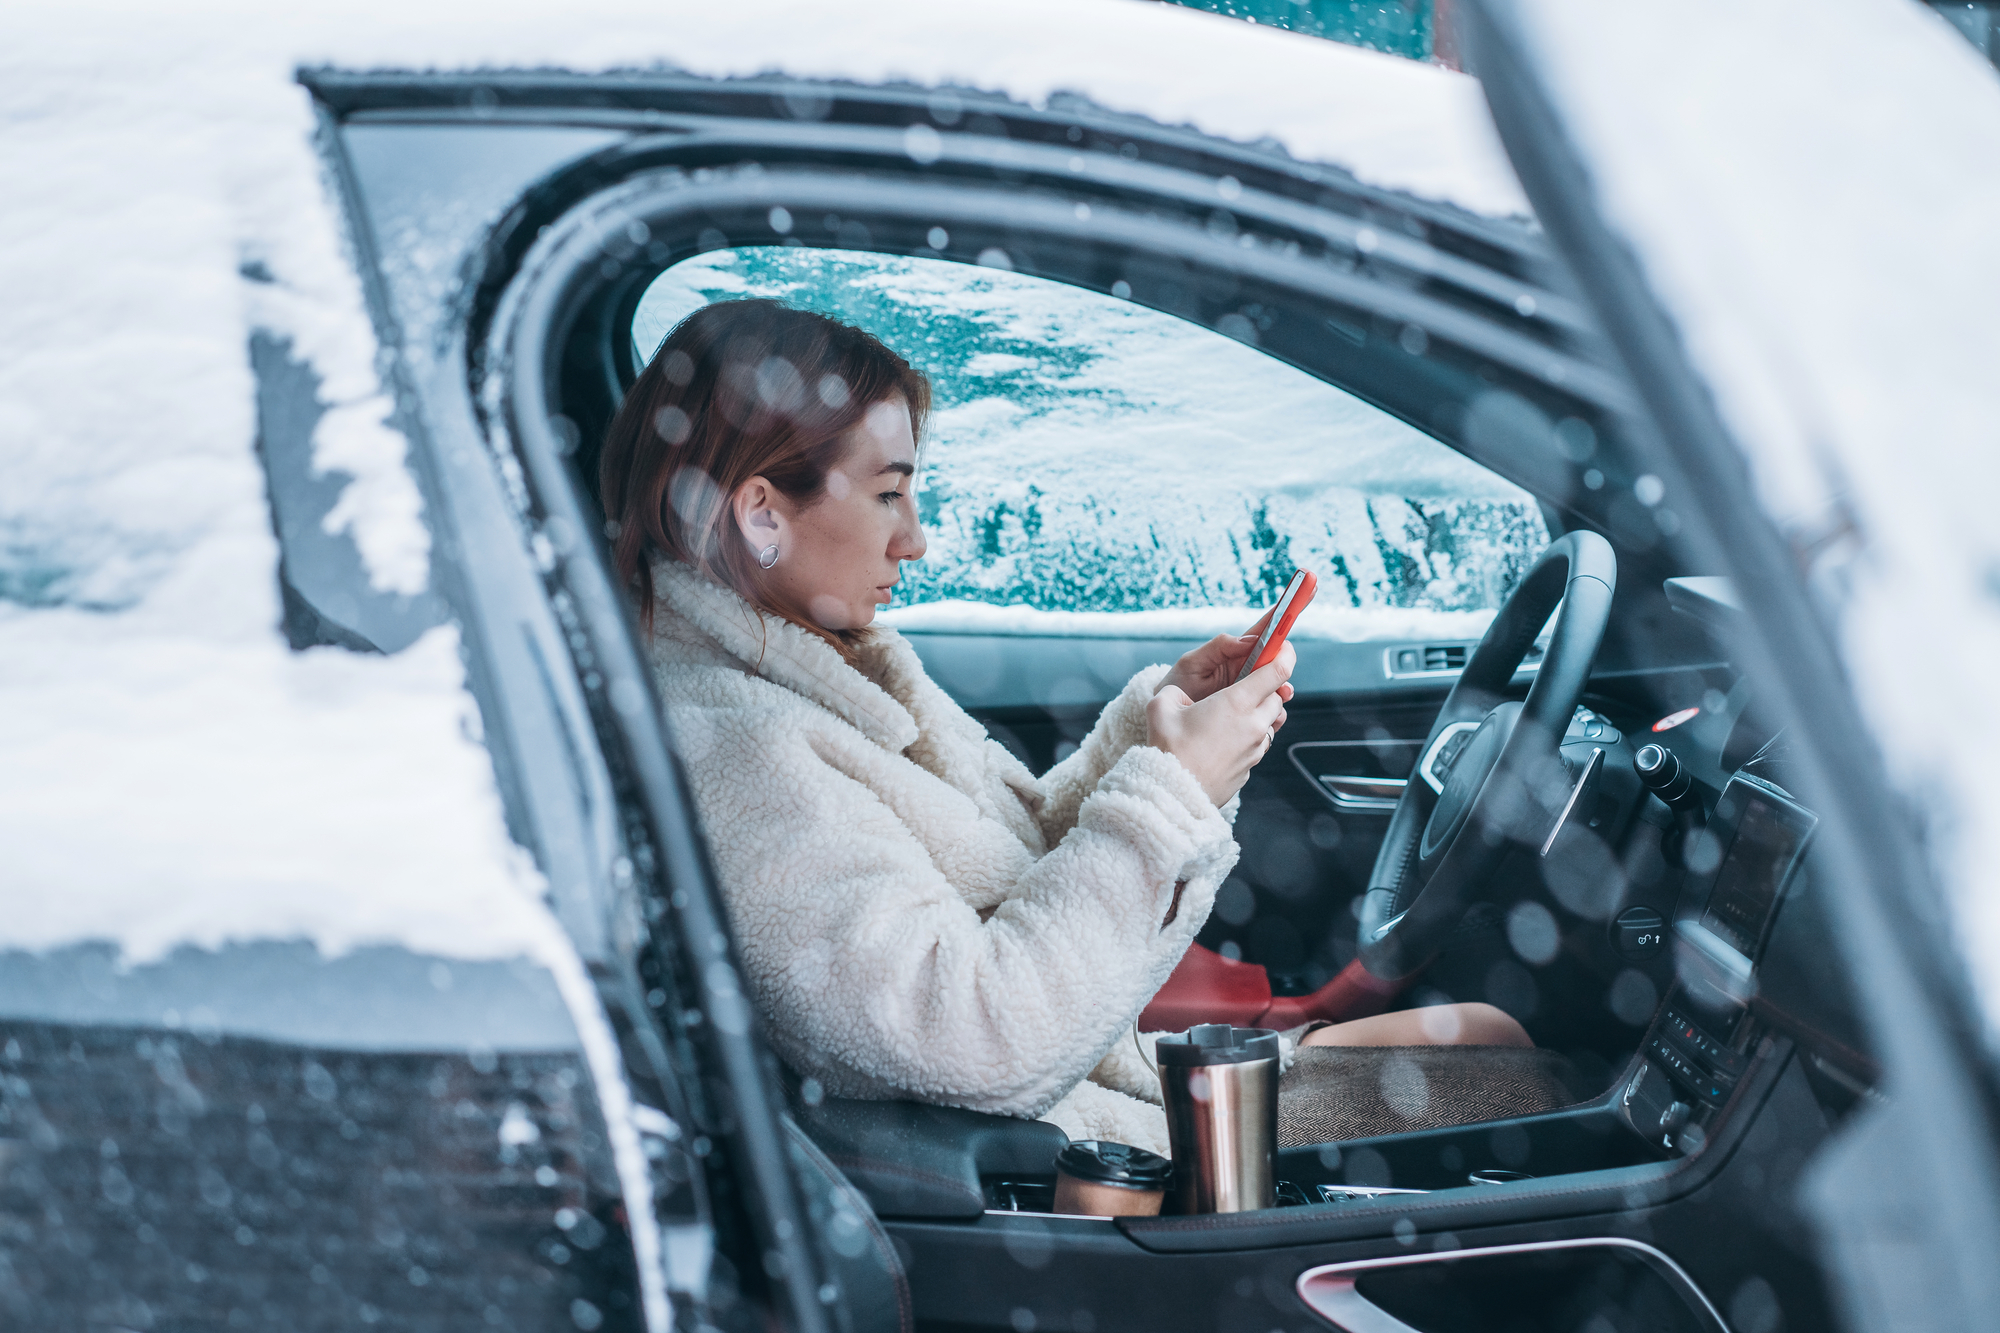 Woman holding mobile phone inside car, winter outside.